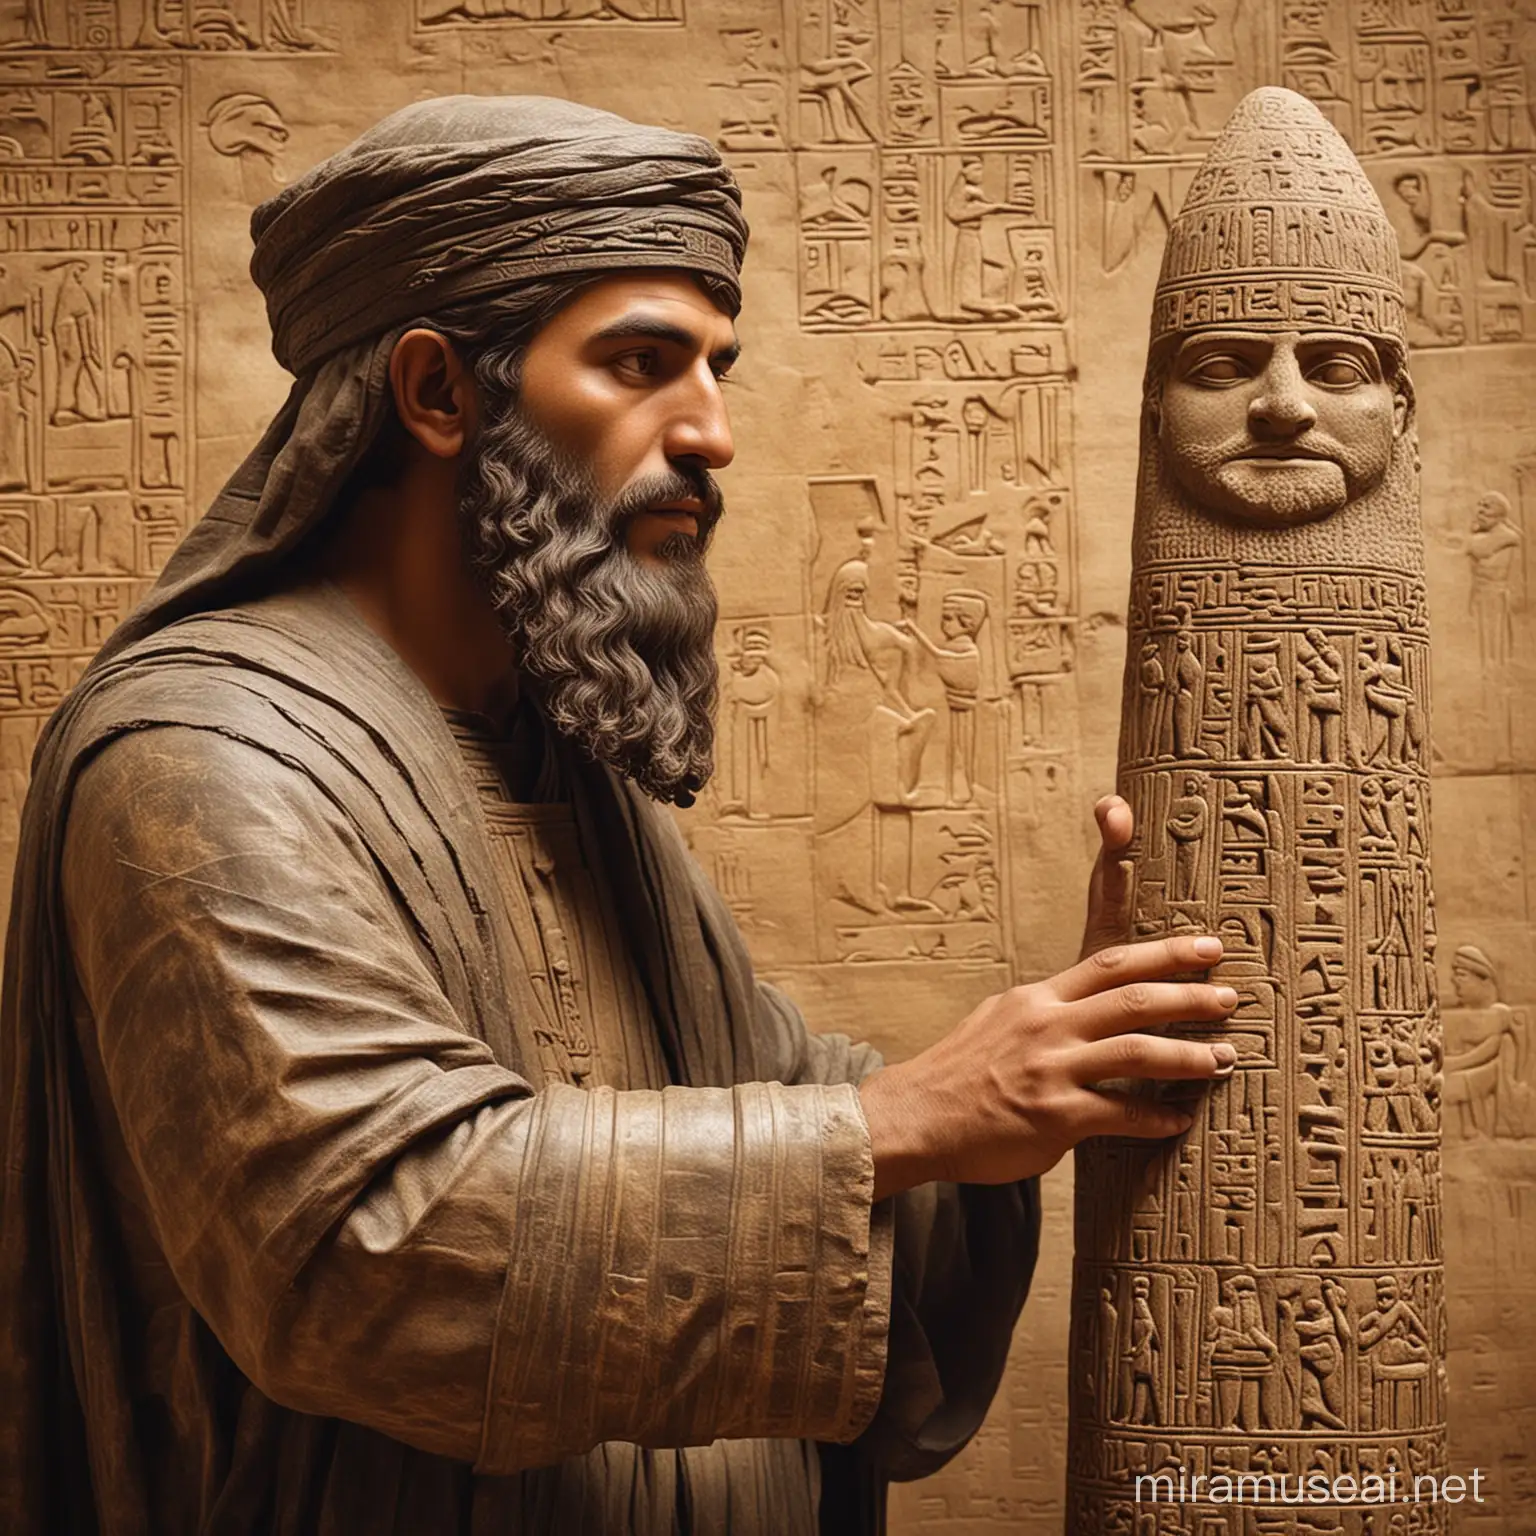 Babylonian Man Holding Hammurabi Code in an Ancient Setting